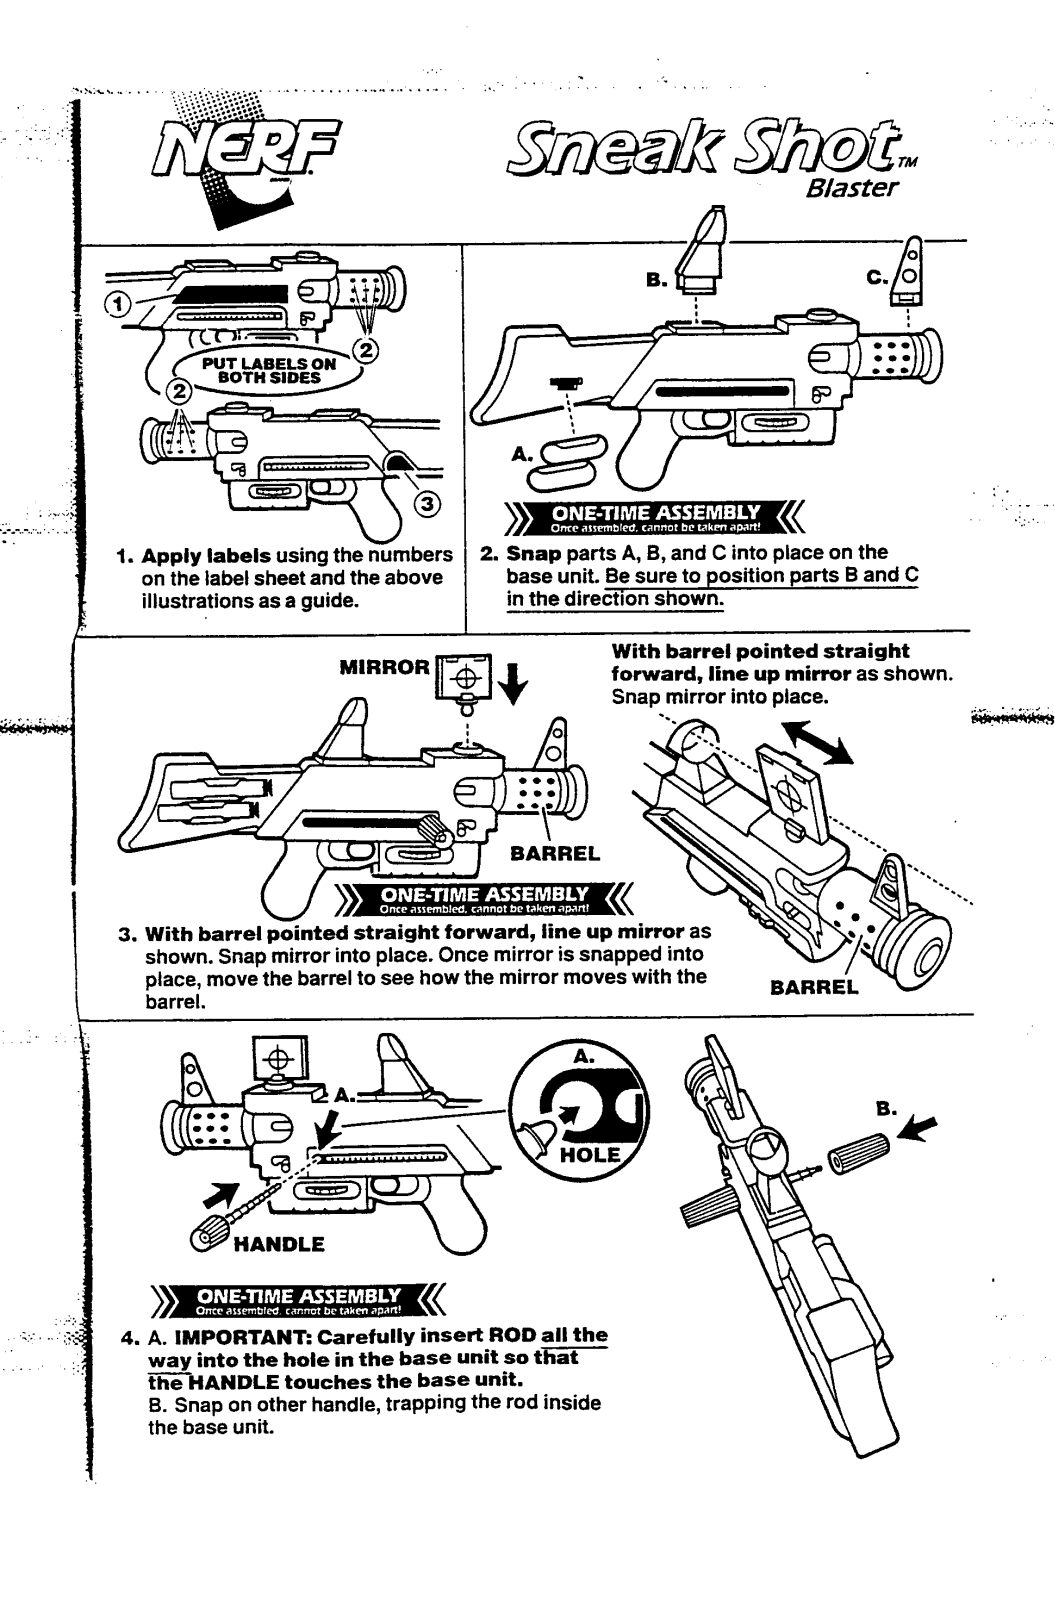 HASBRO Nerf Sneak Shot Blaster User Manual